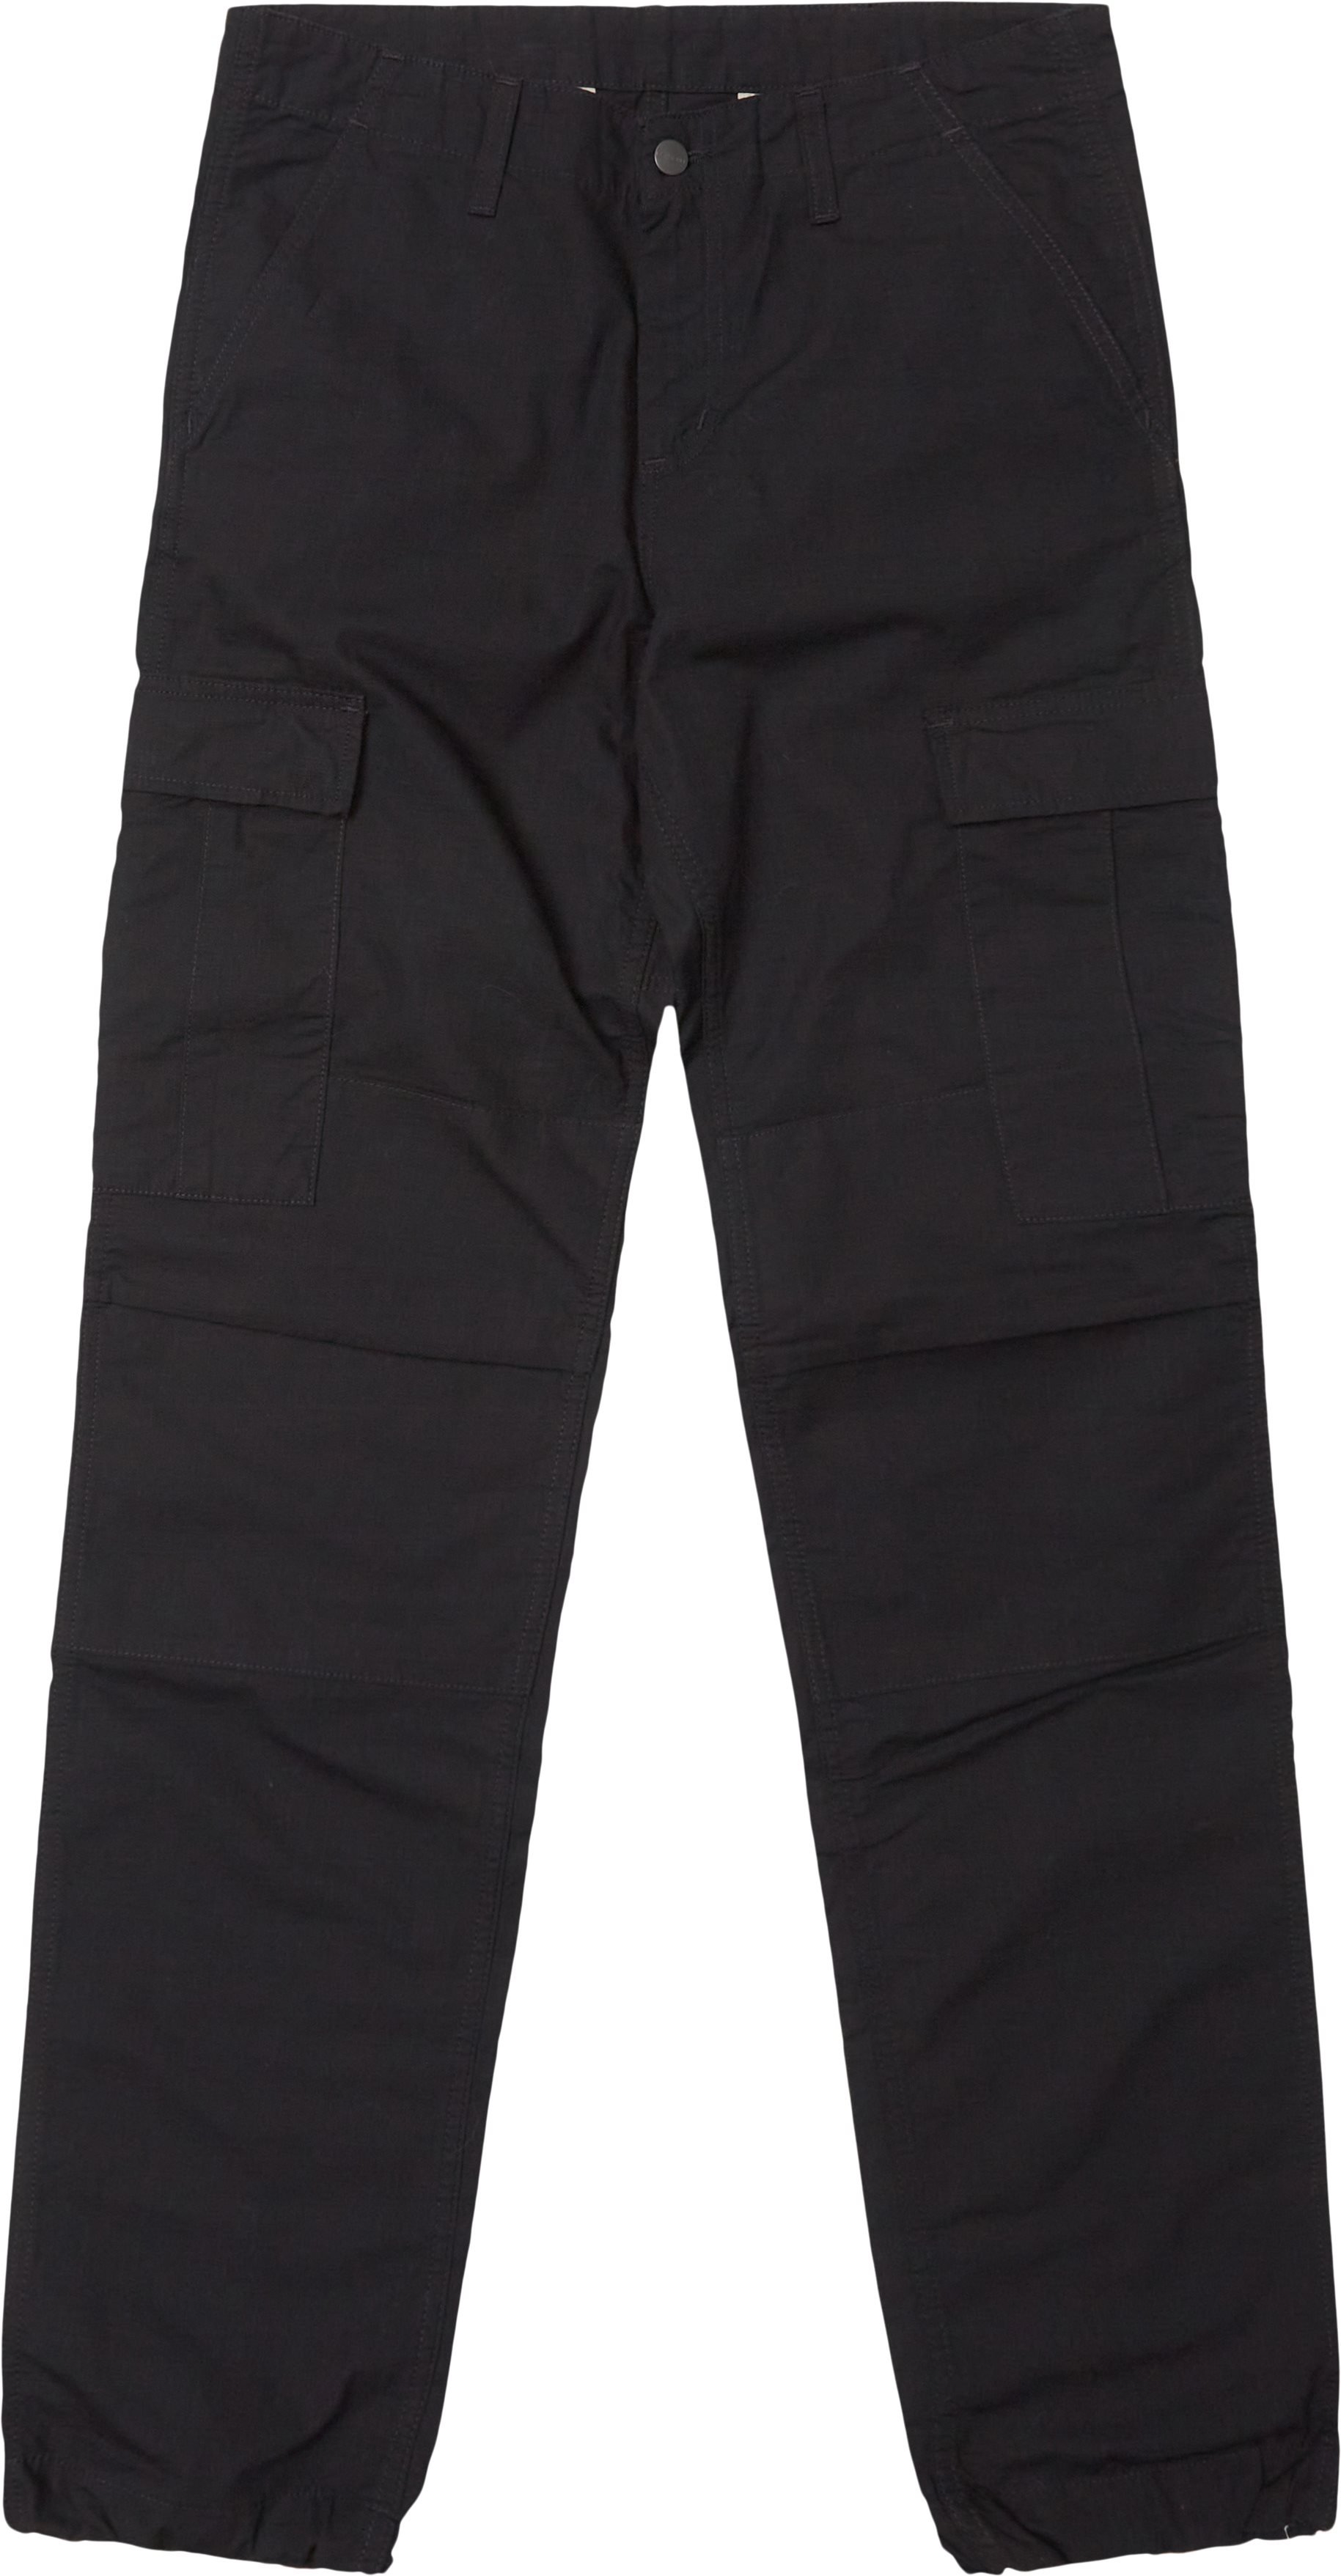 Cargo Pants I015875 - Bukser - Regular fit - Sort